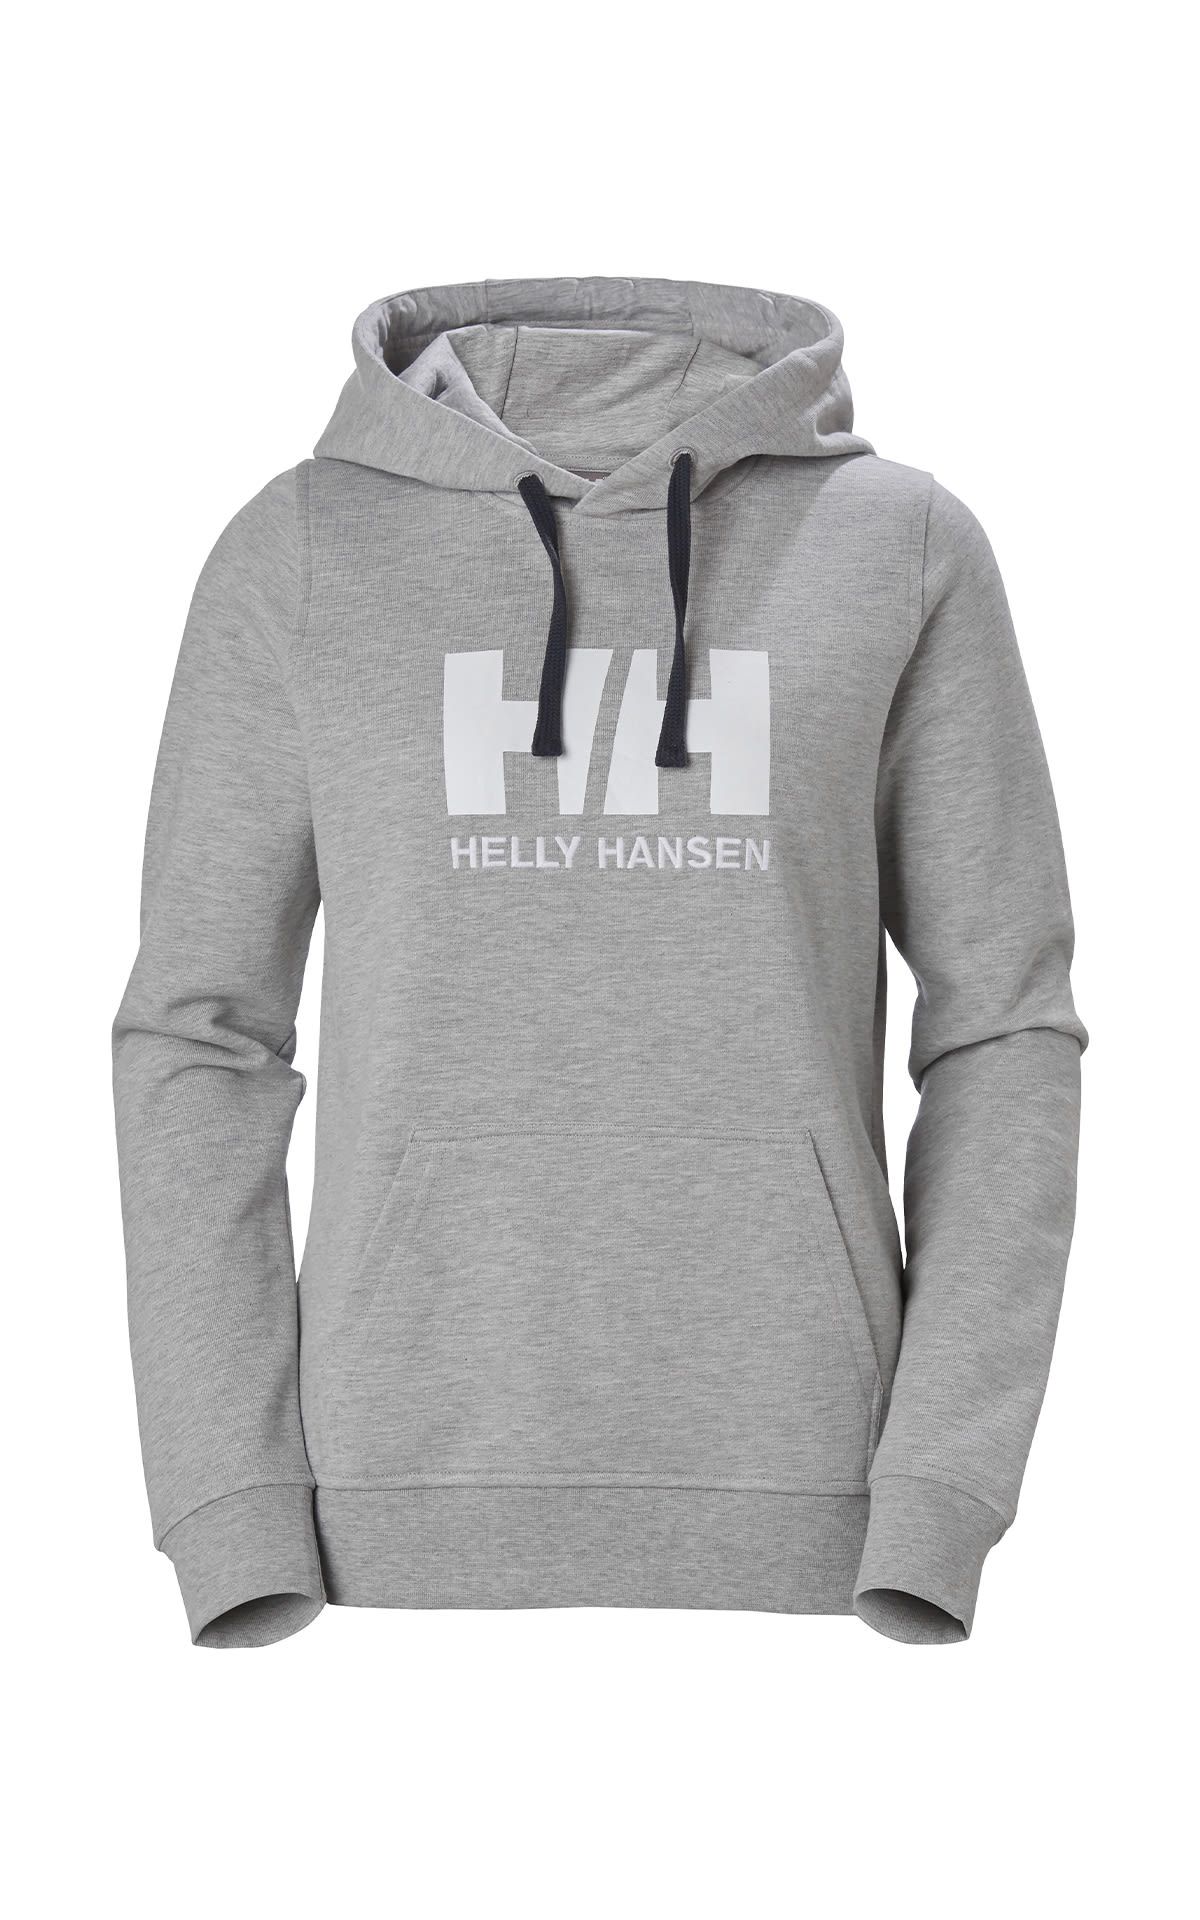 Helly Hansen Grey hoodies with logo